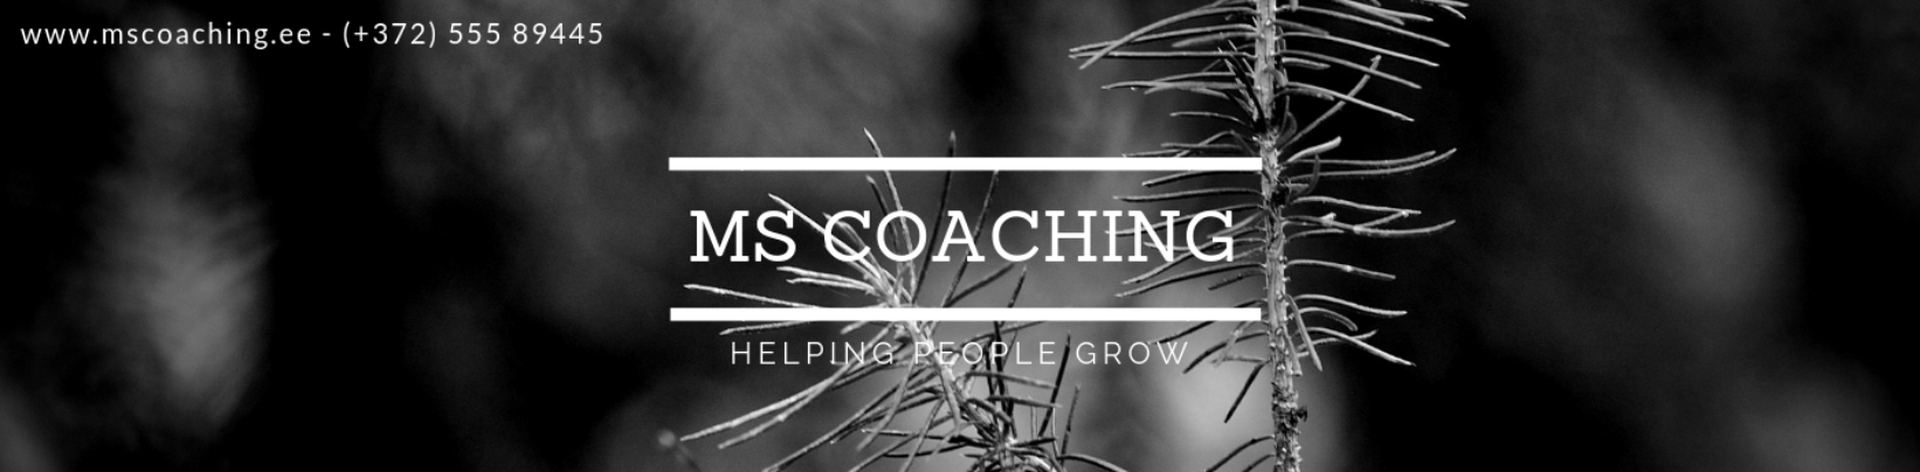 Executive coaching, Performance coaching, Career coaching, Trainings and Seminars